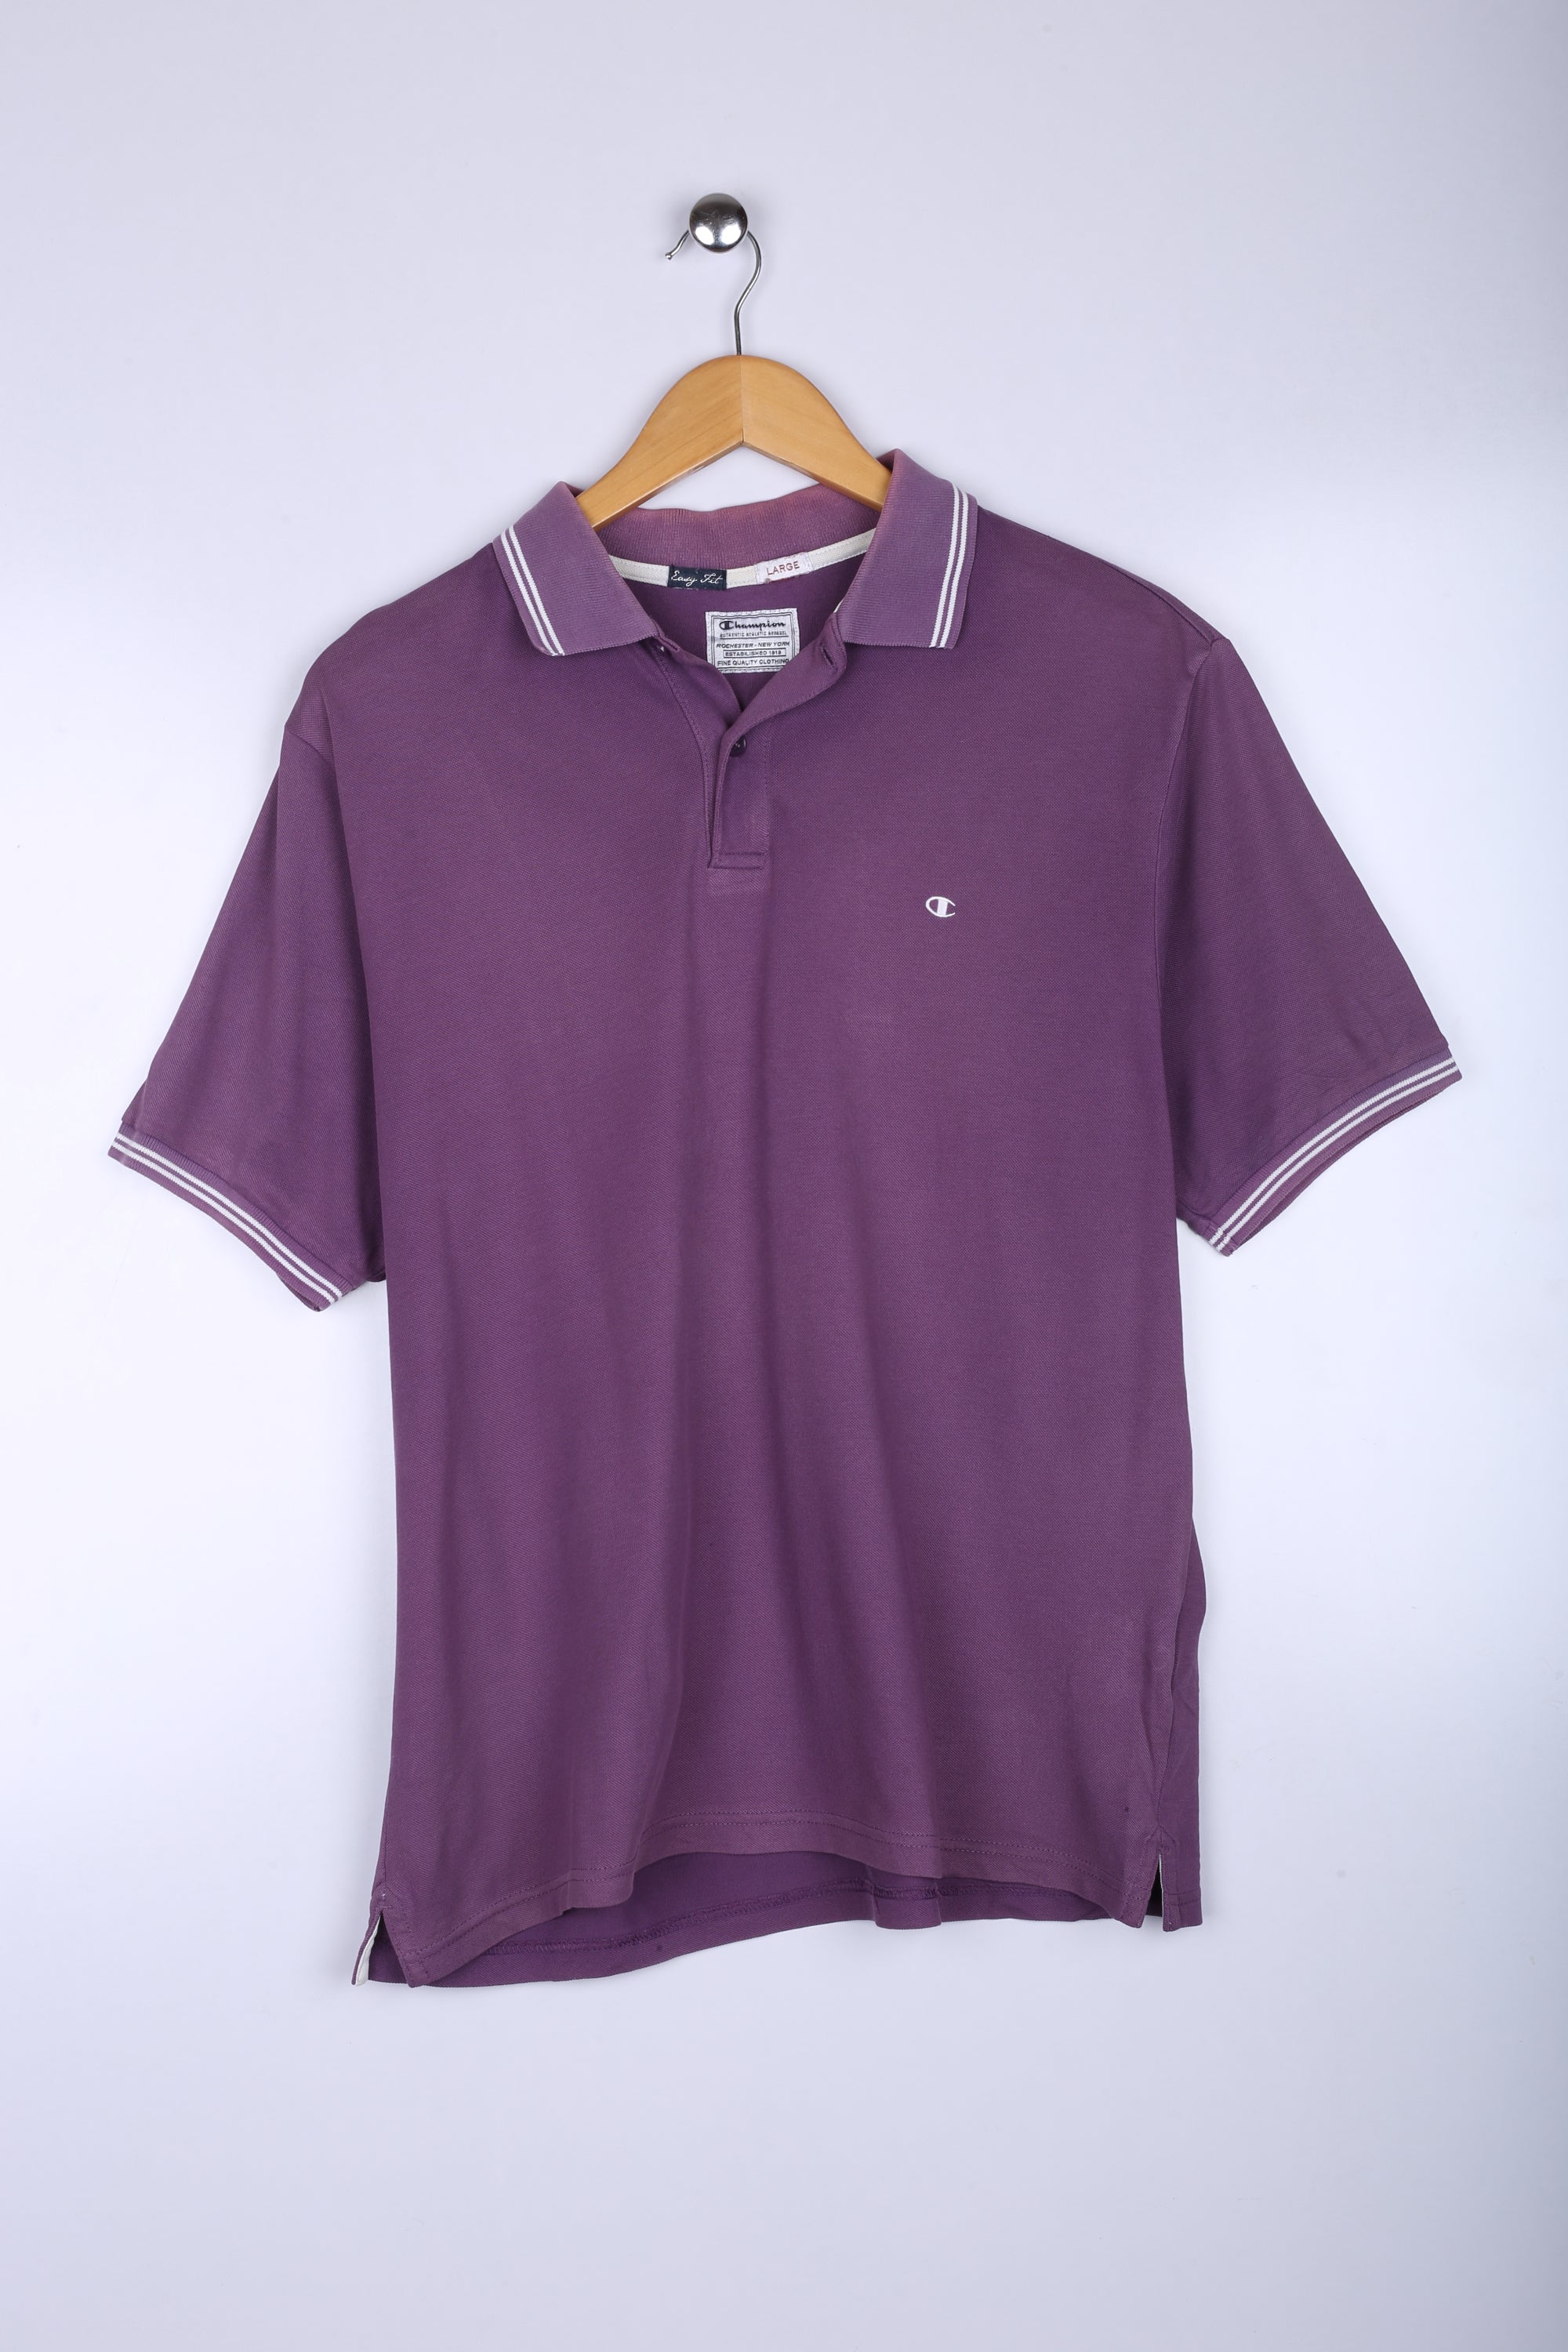 Vintage 90's Champion Polo Purple